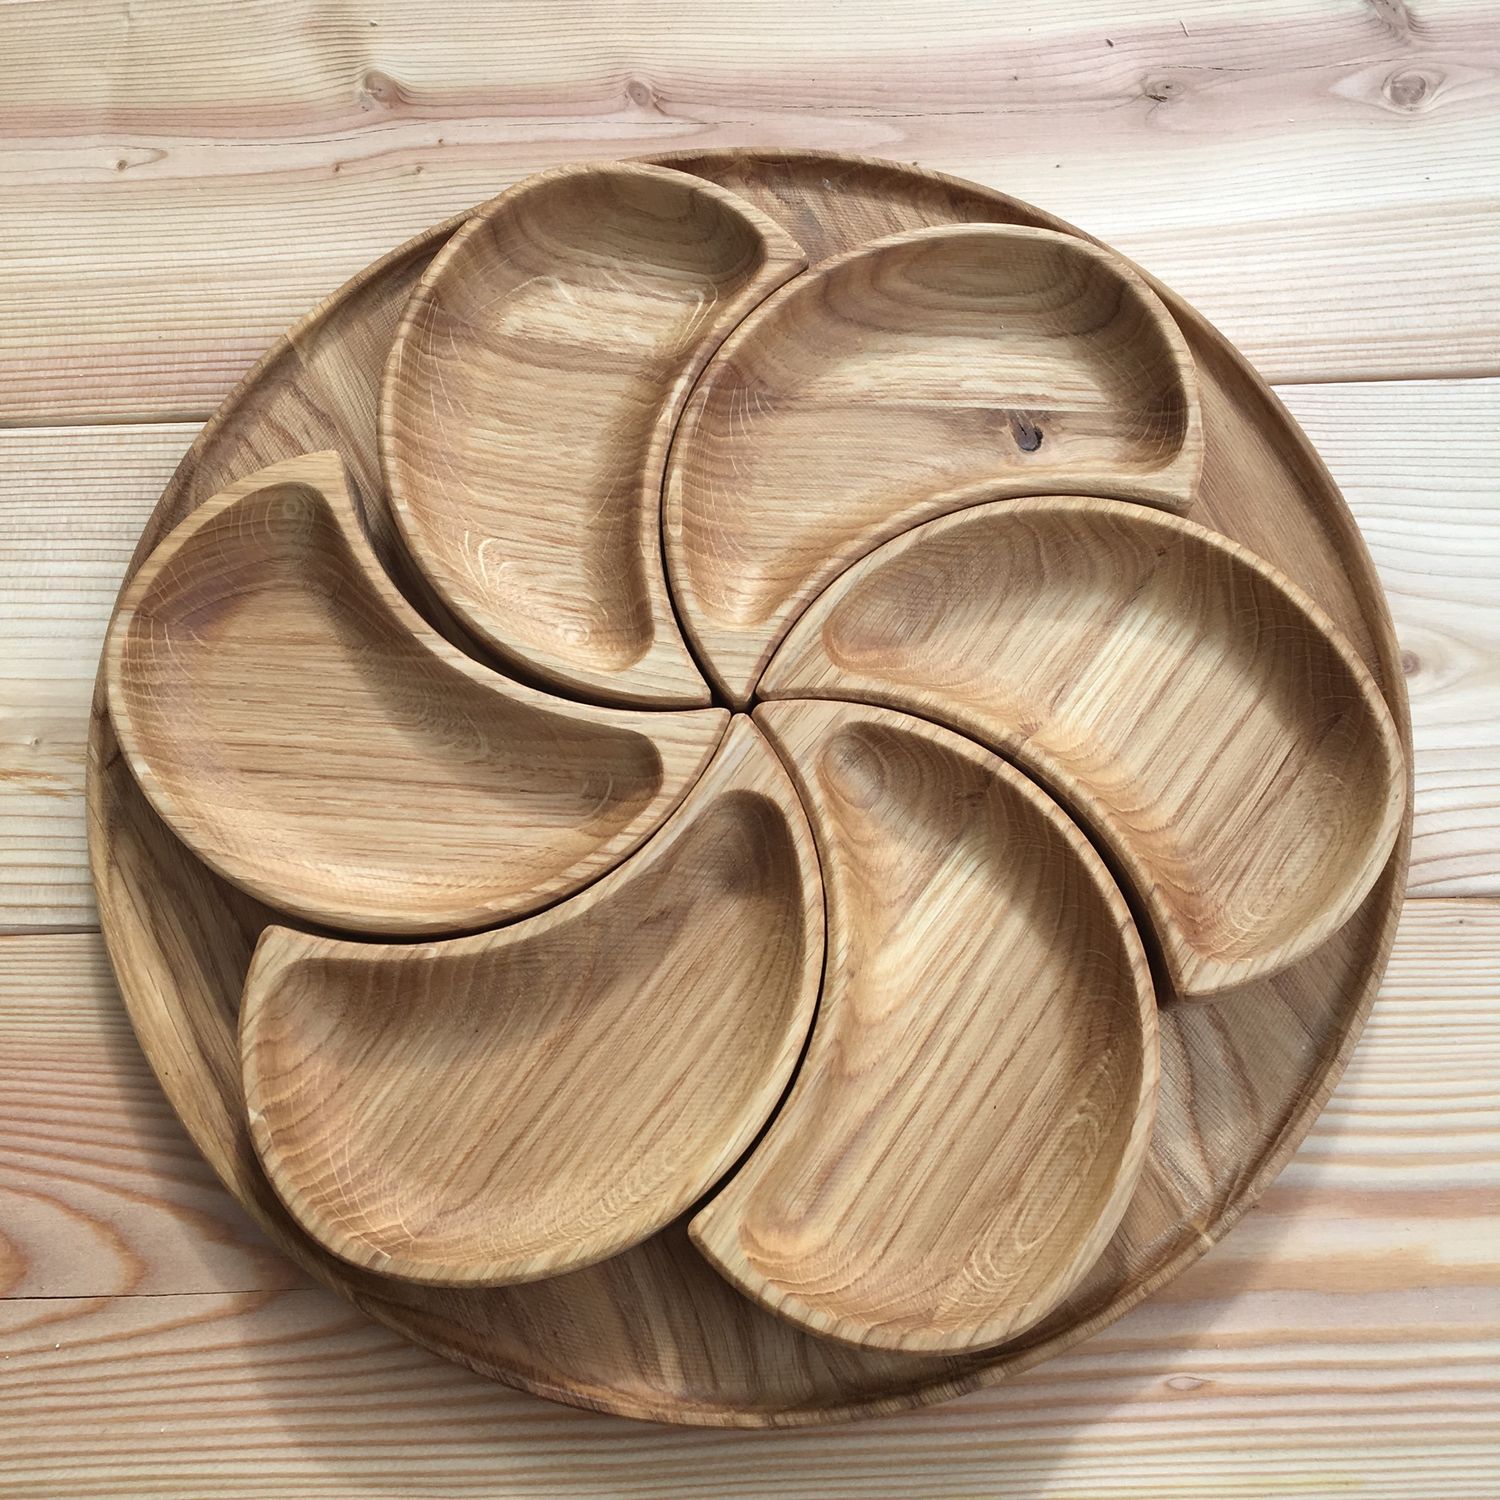 Wooden craft. Деревянная тарелка. Тарелки из дерева. Тарелки из дерева на ЧПУ. Деревянная посуда на ЧПУ.